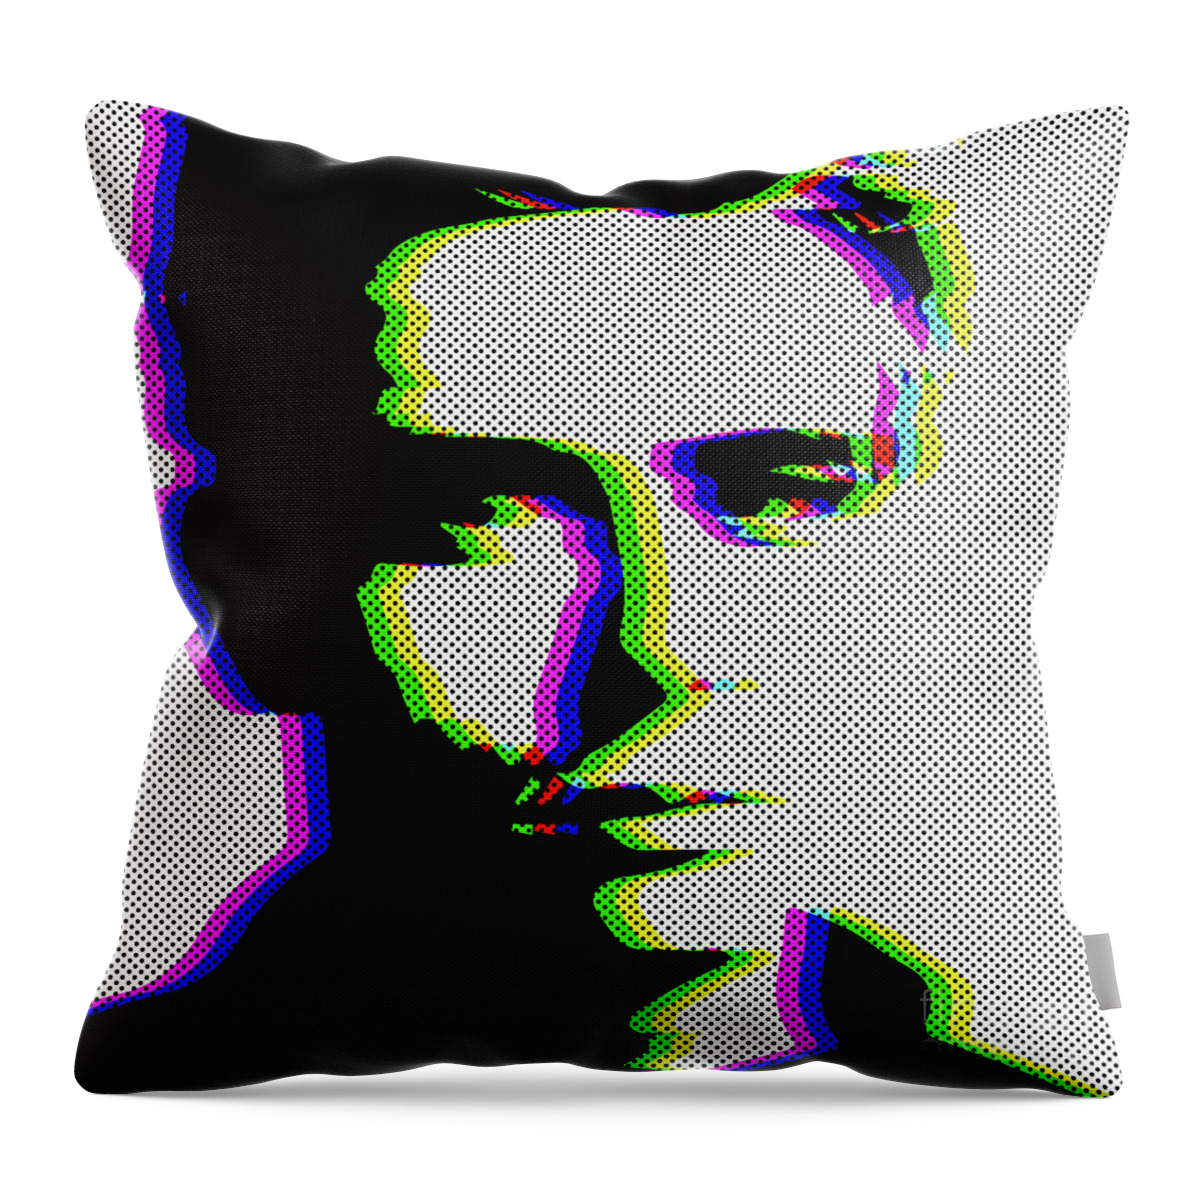 James Dean Throw Pillow featuring the digital art James Dean 010 by Bobbi Freelance